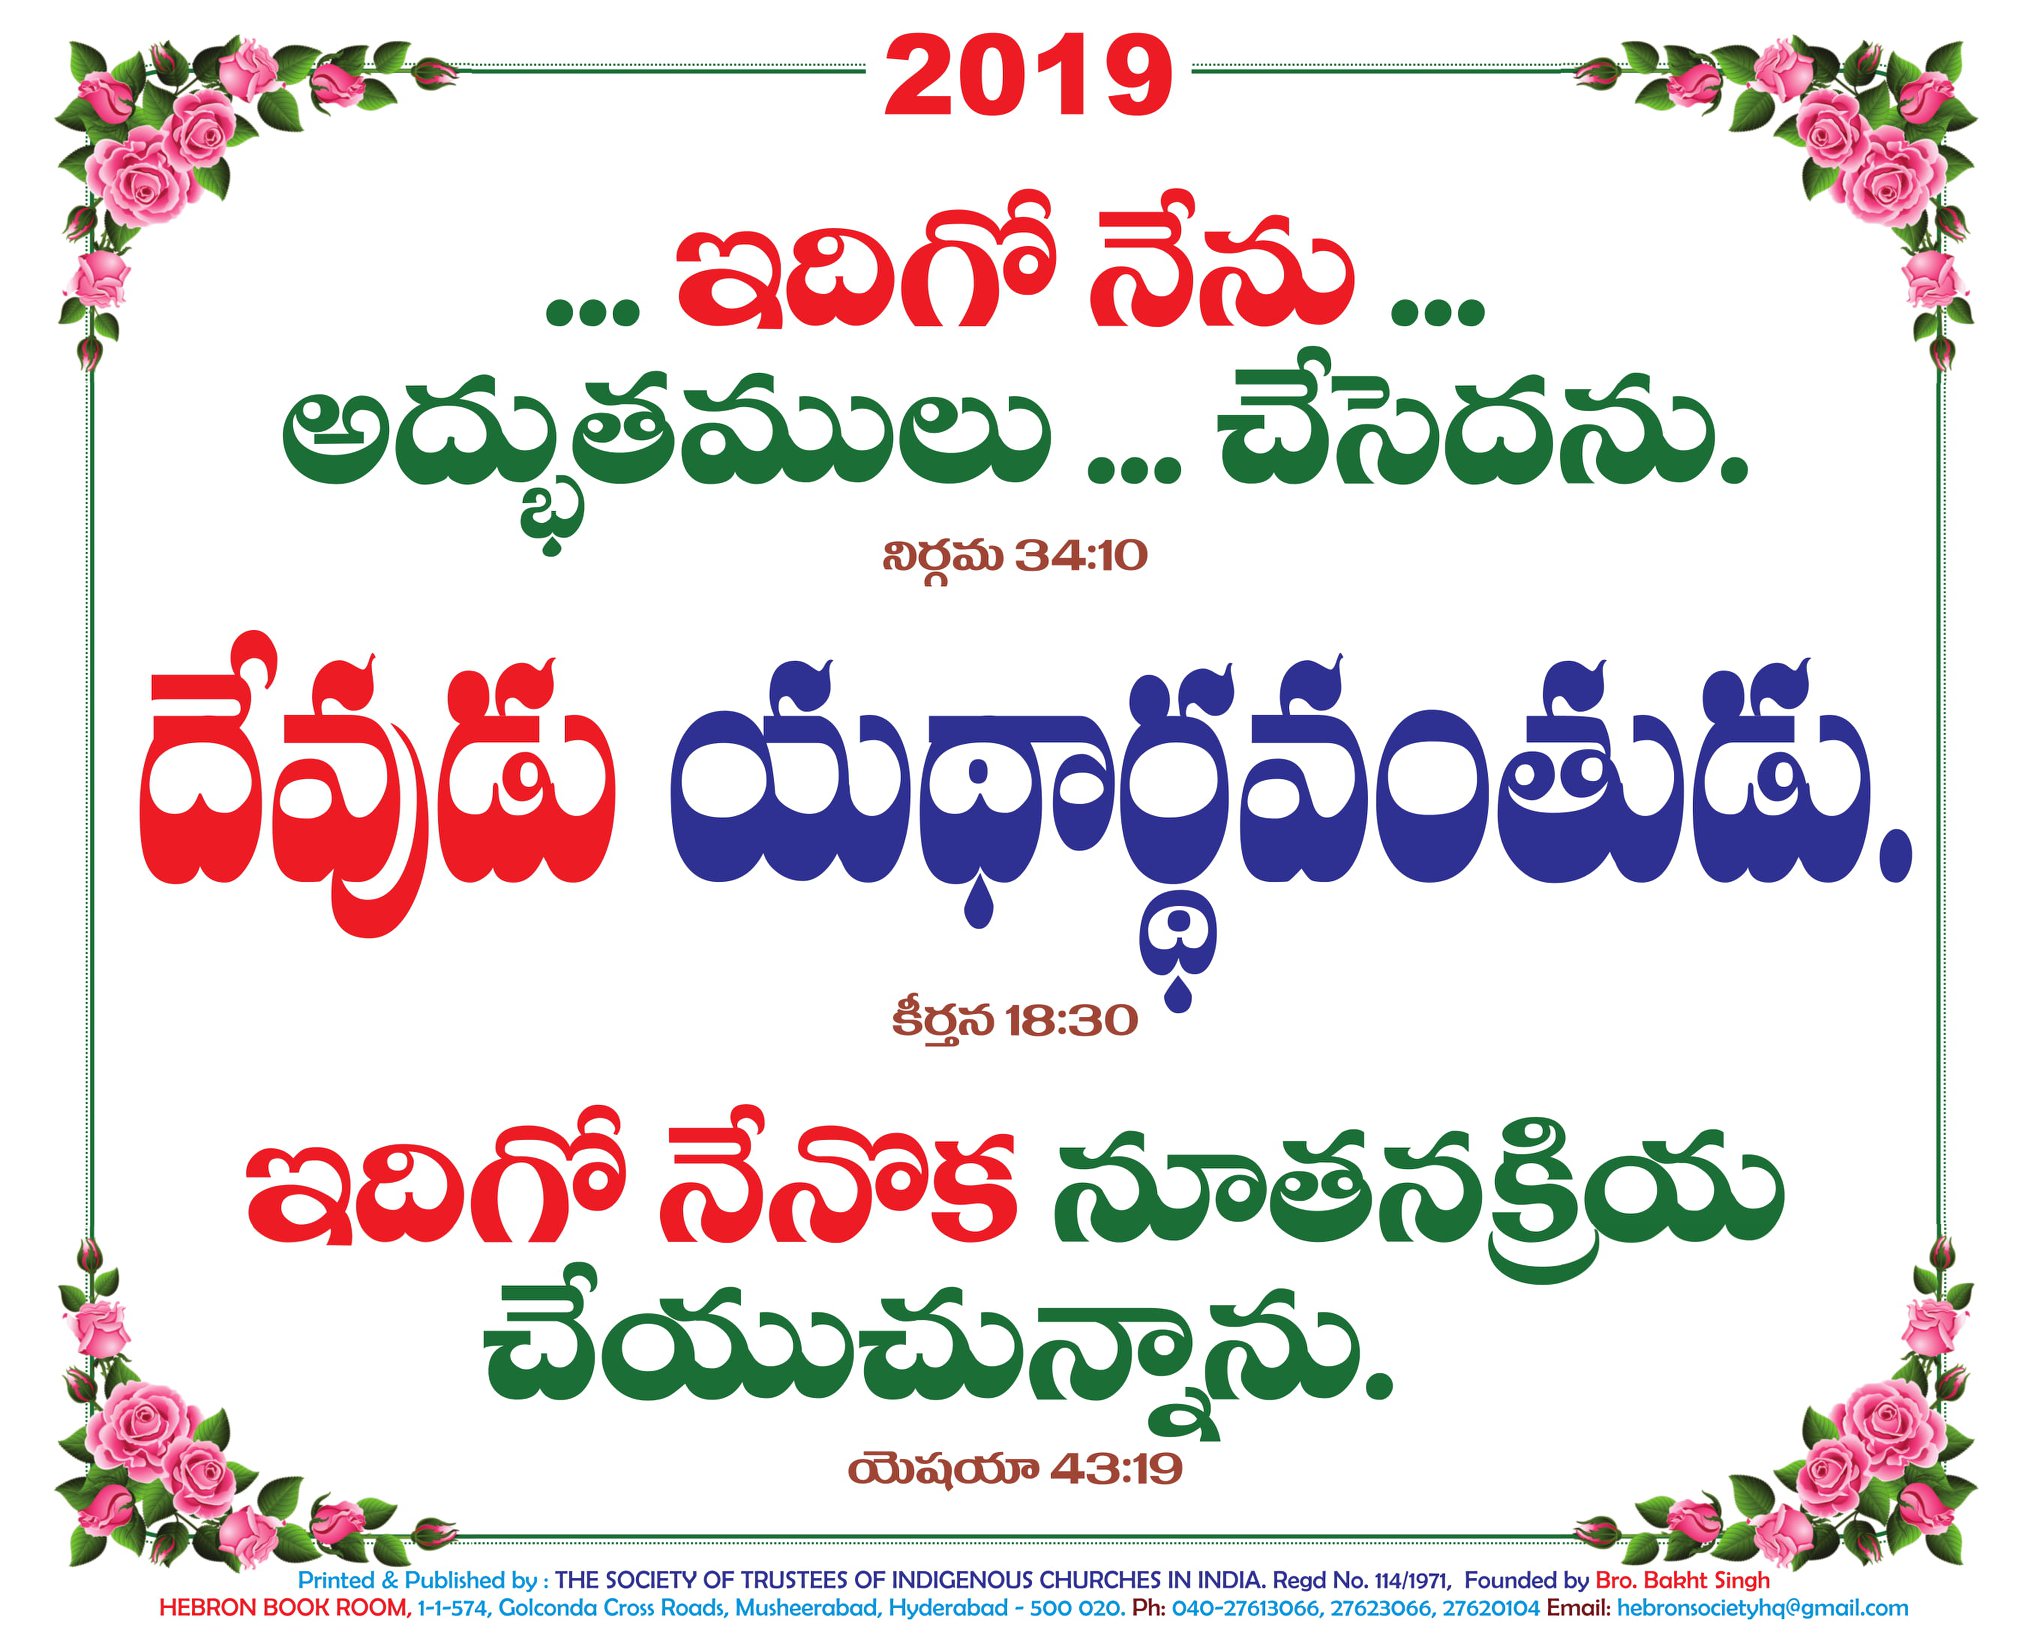 Hebron Motto card 2019 Telugu